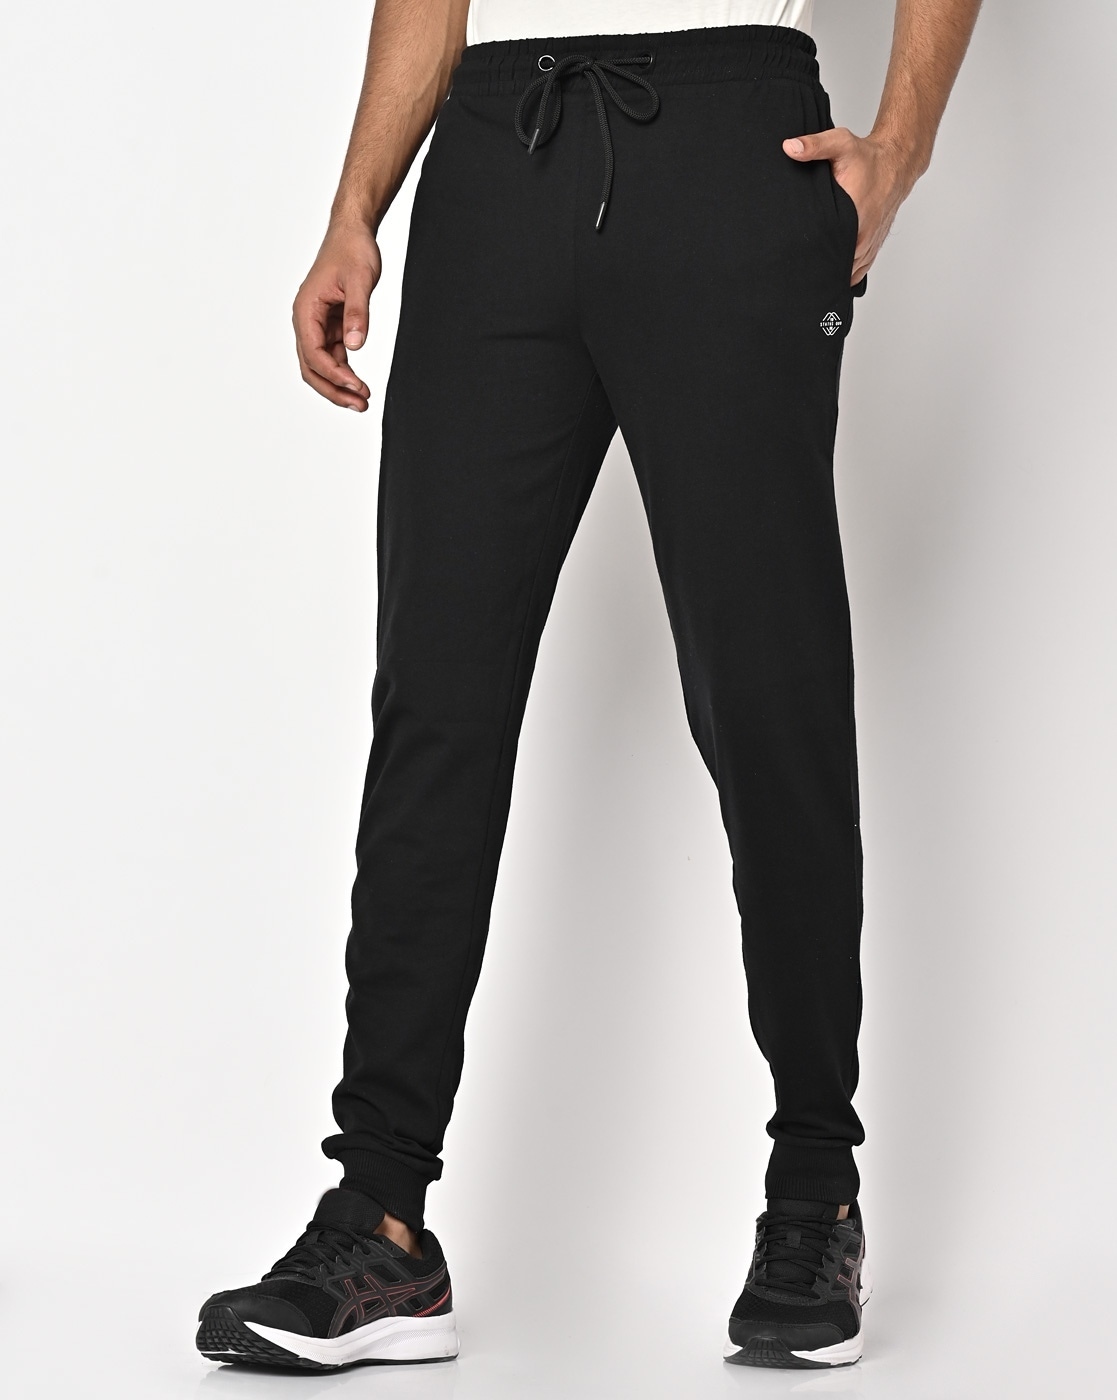 Buy Grey Track Pants for Men by GLOWIC Online | Ajio.com